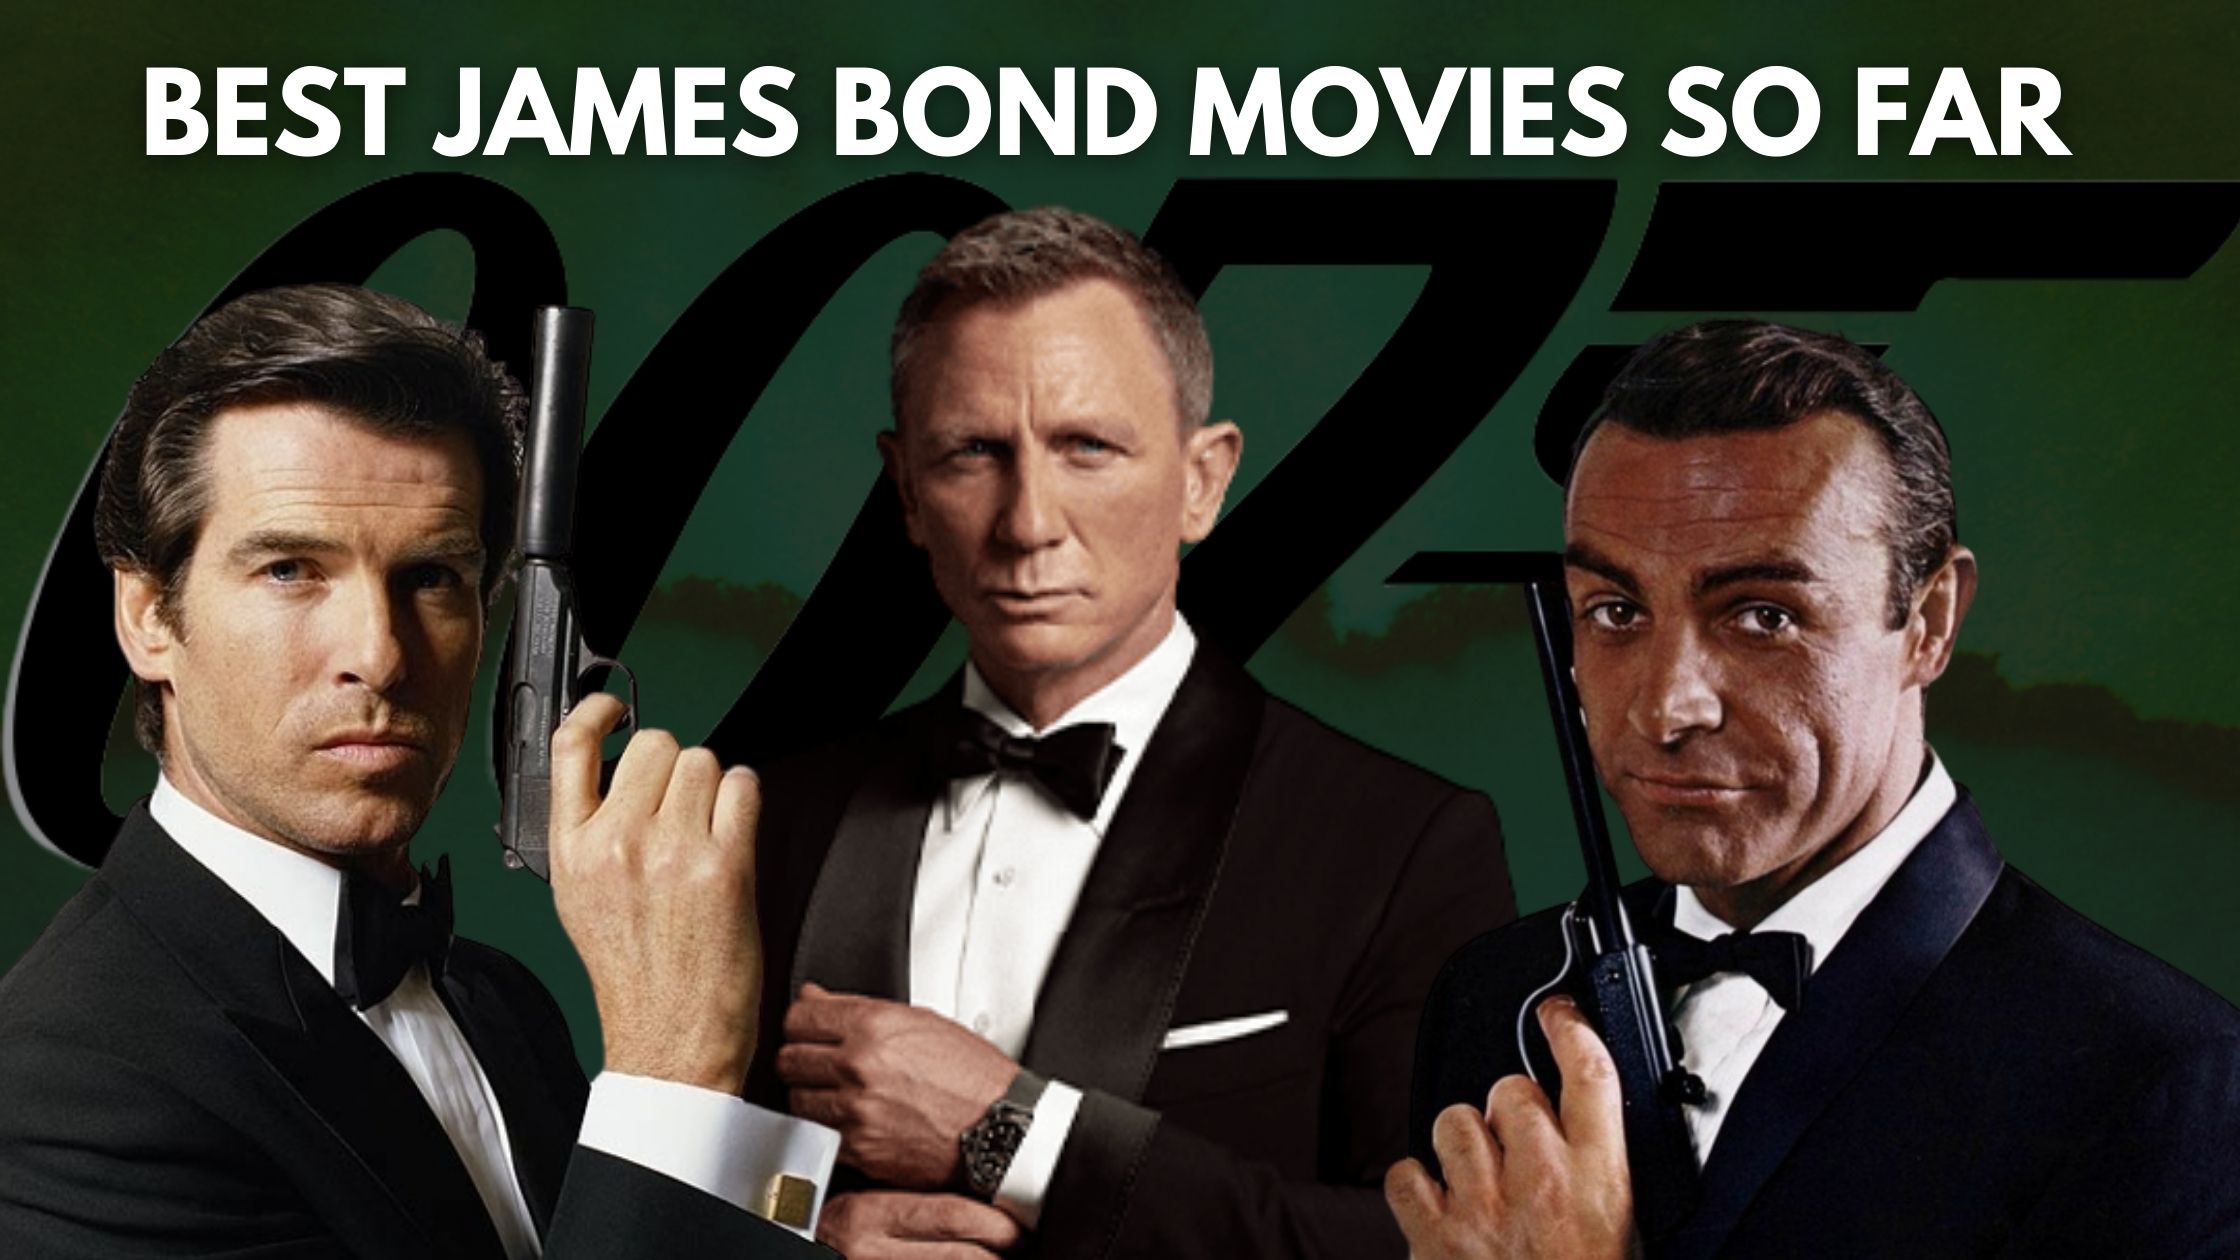 Top 10 Best James Bond Movies So Far